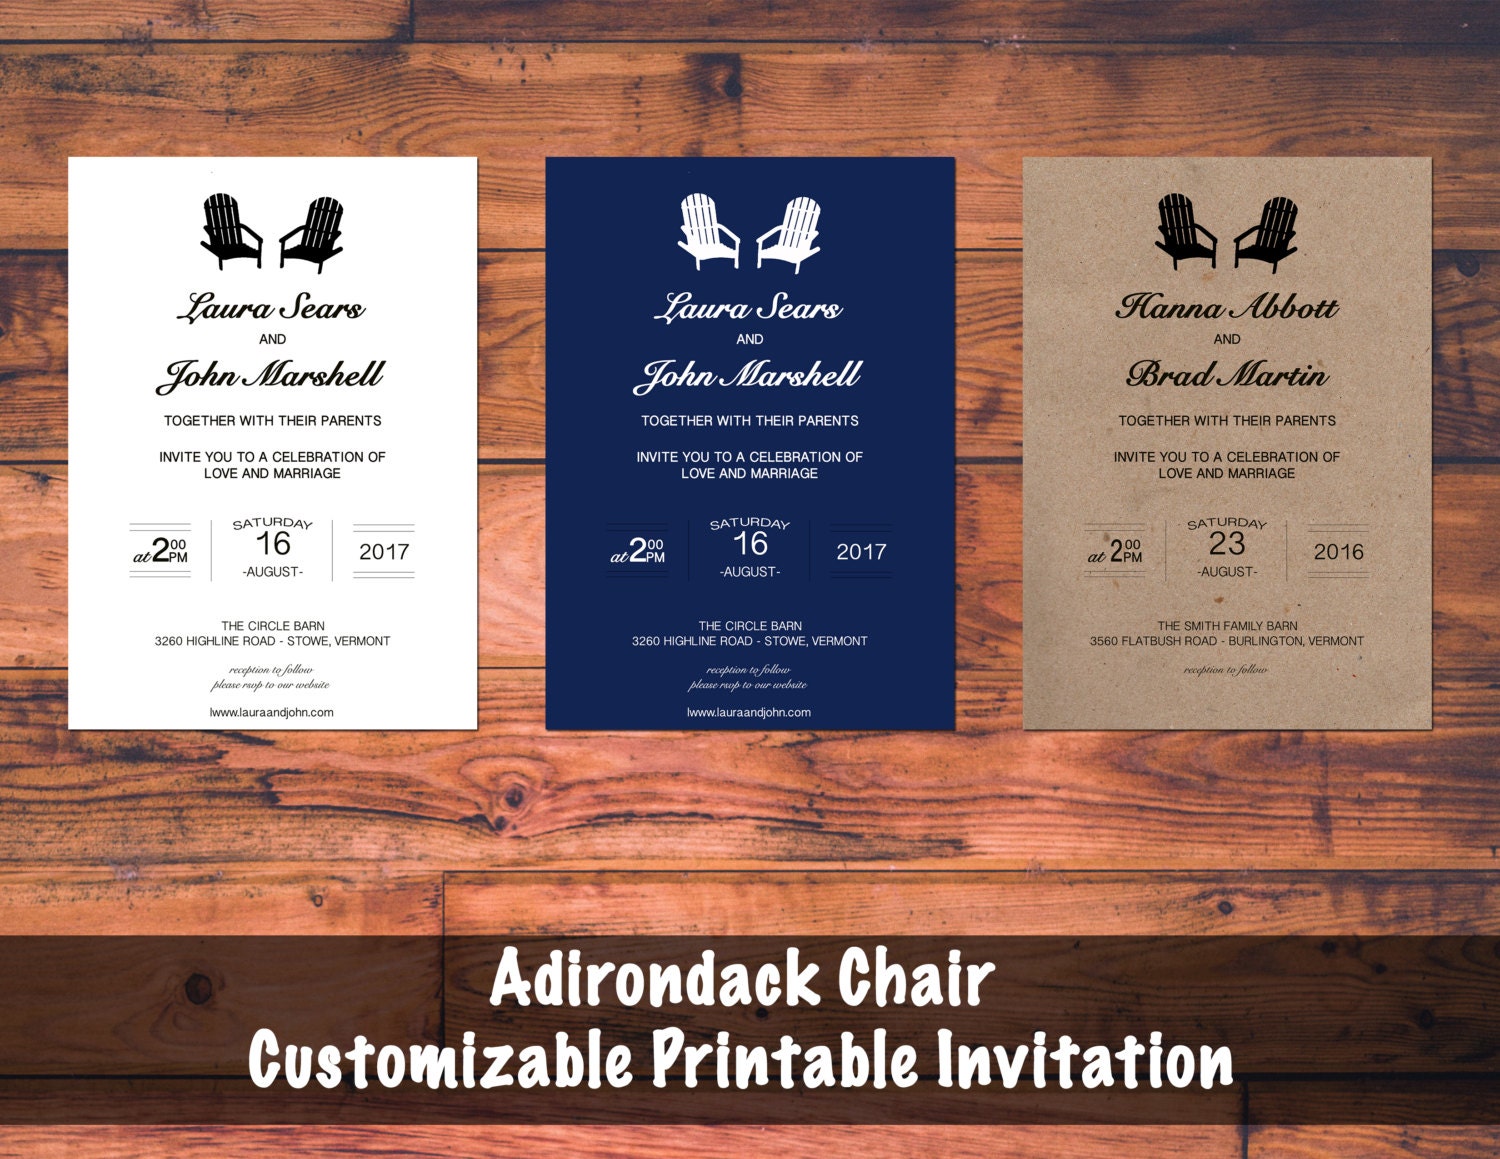 Personalized and Customizable Adirondack Chair Invitation